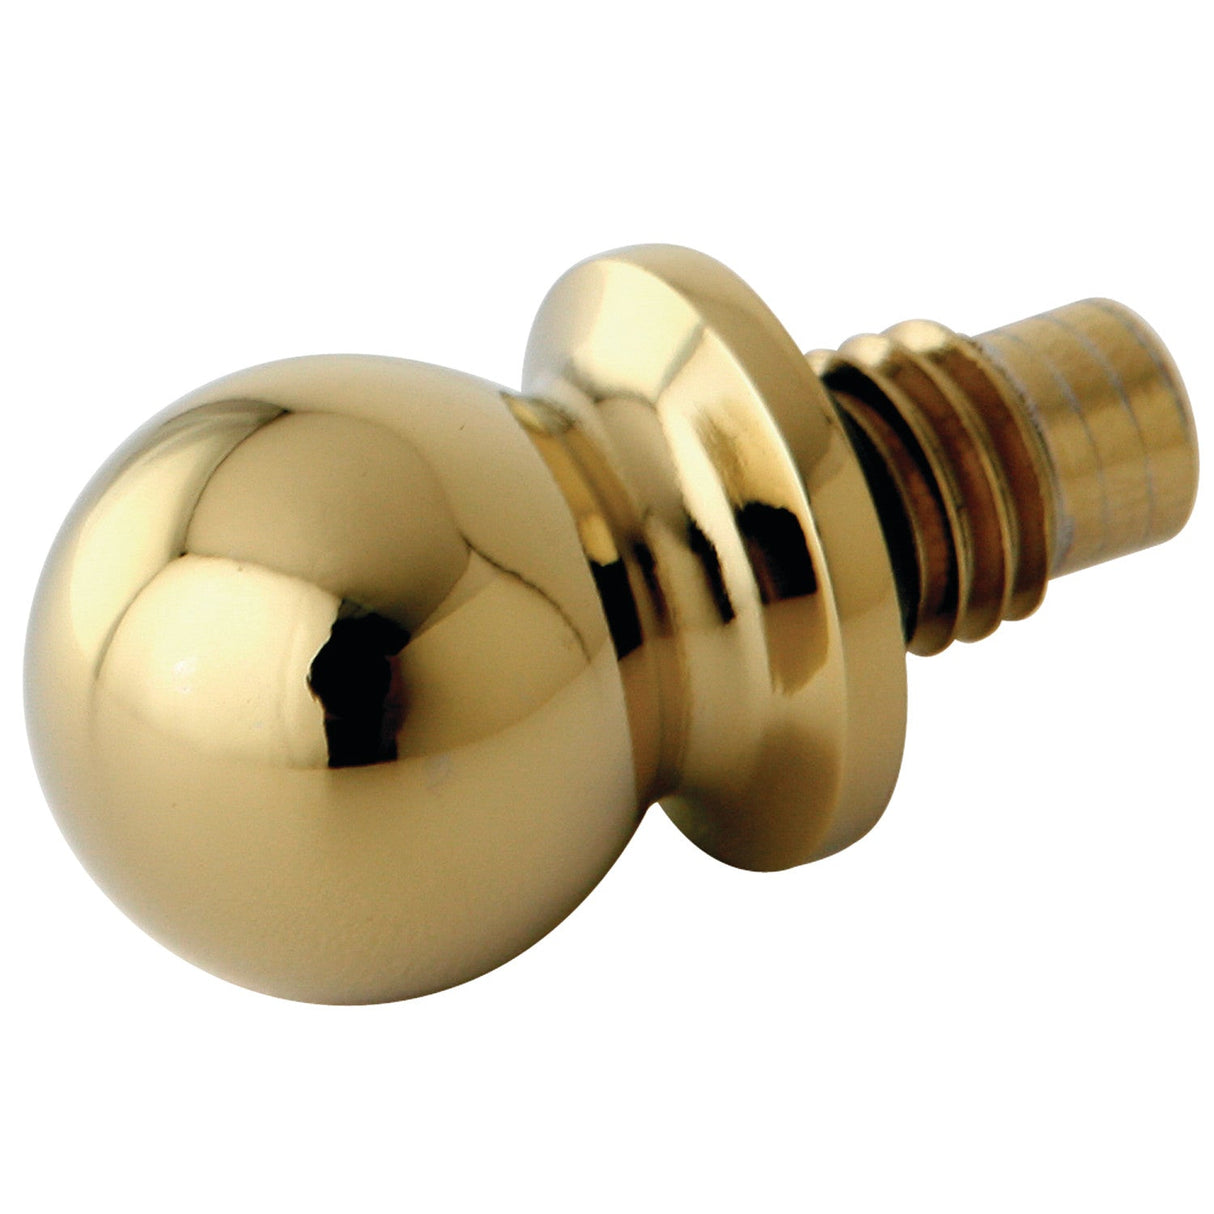 KBSPB1792 Faucet Spout Button, Polished Brass